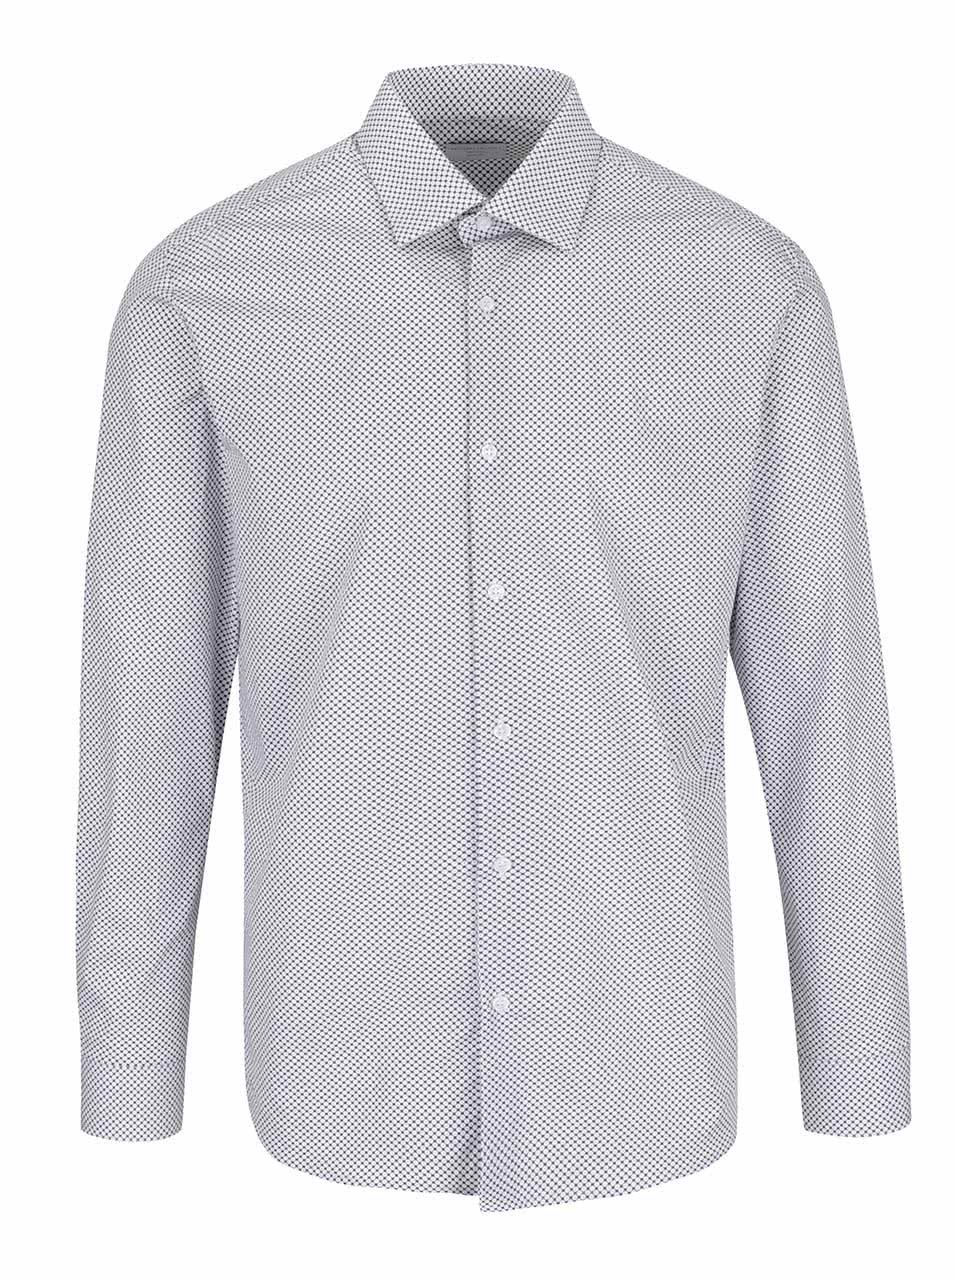 Bílá slim fit košile s šedým vzorem Selected Homme Donepen Timper